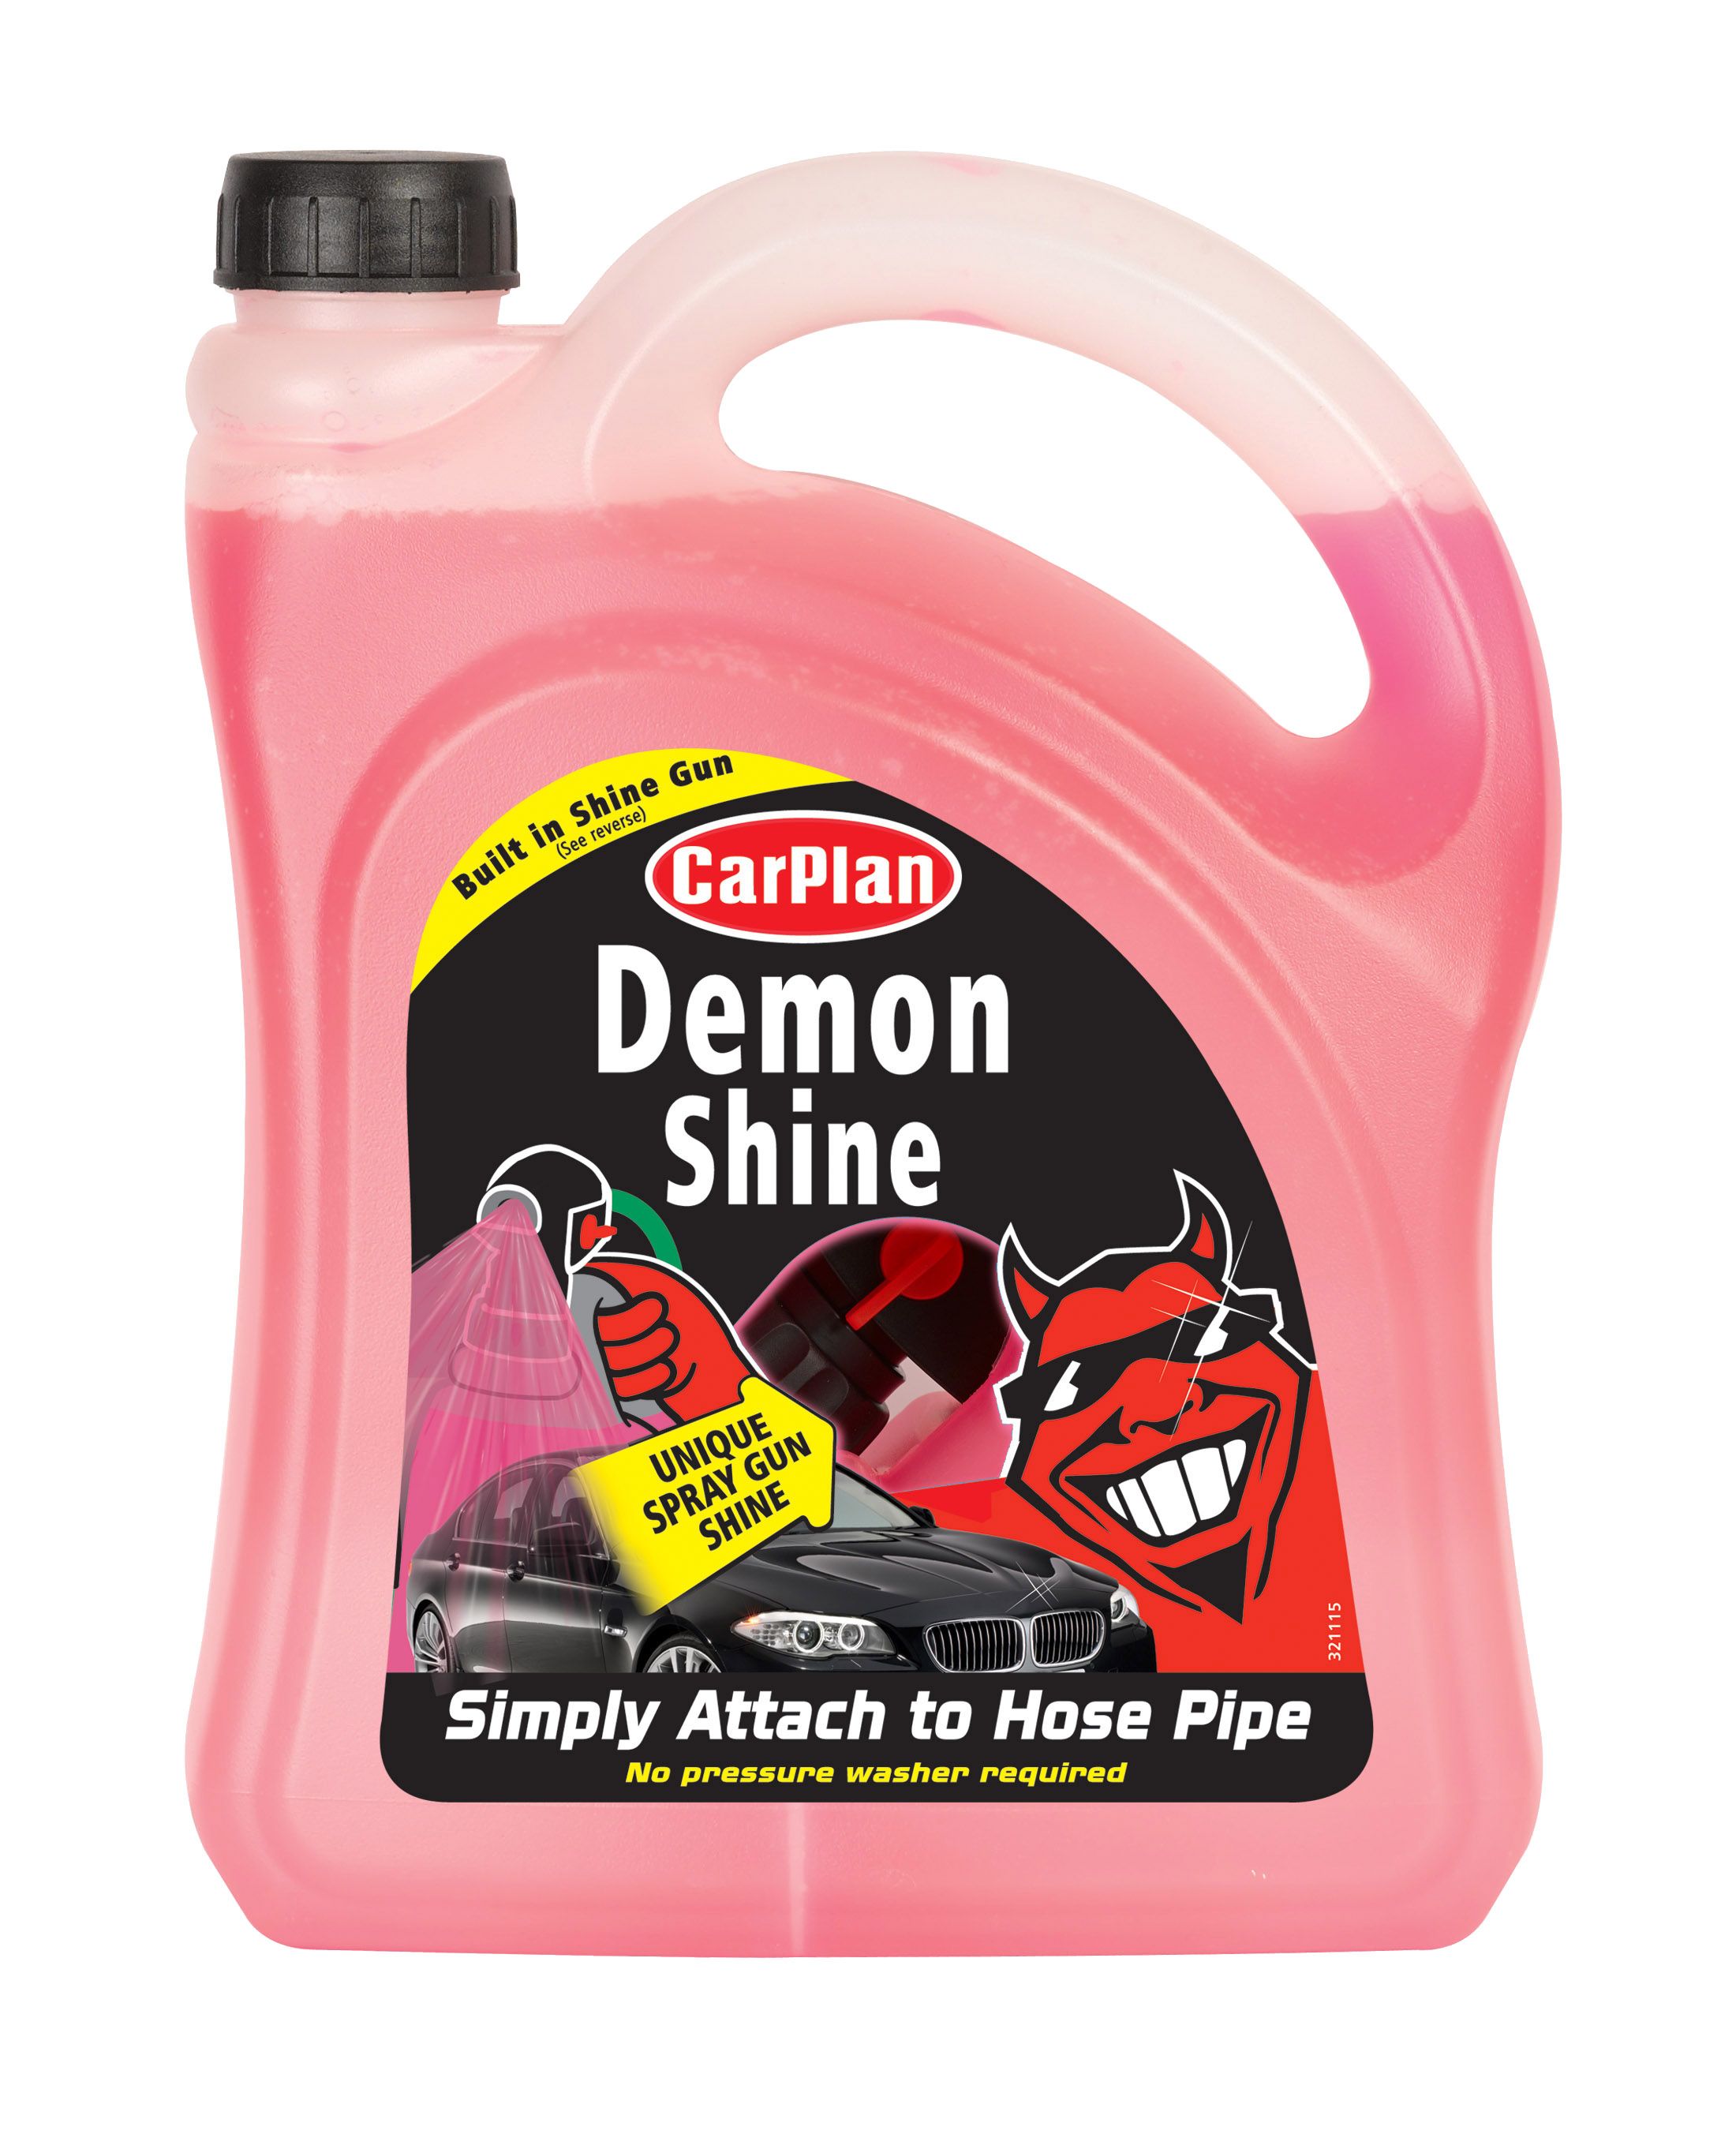 CarPlan Demon Shine Car polish, 2L Bottle